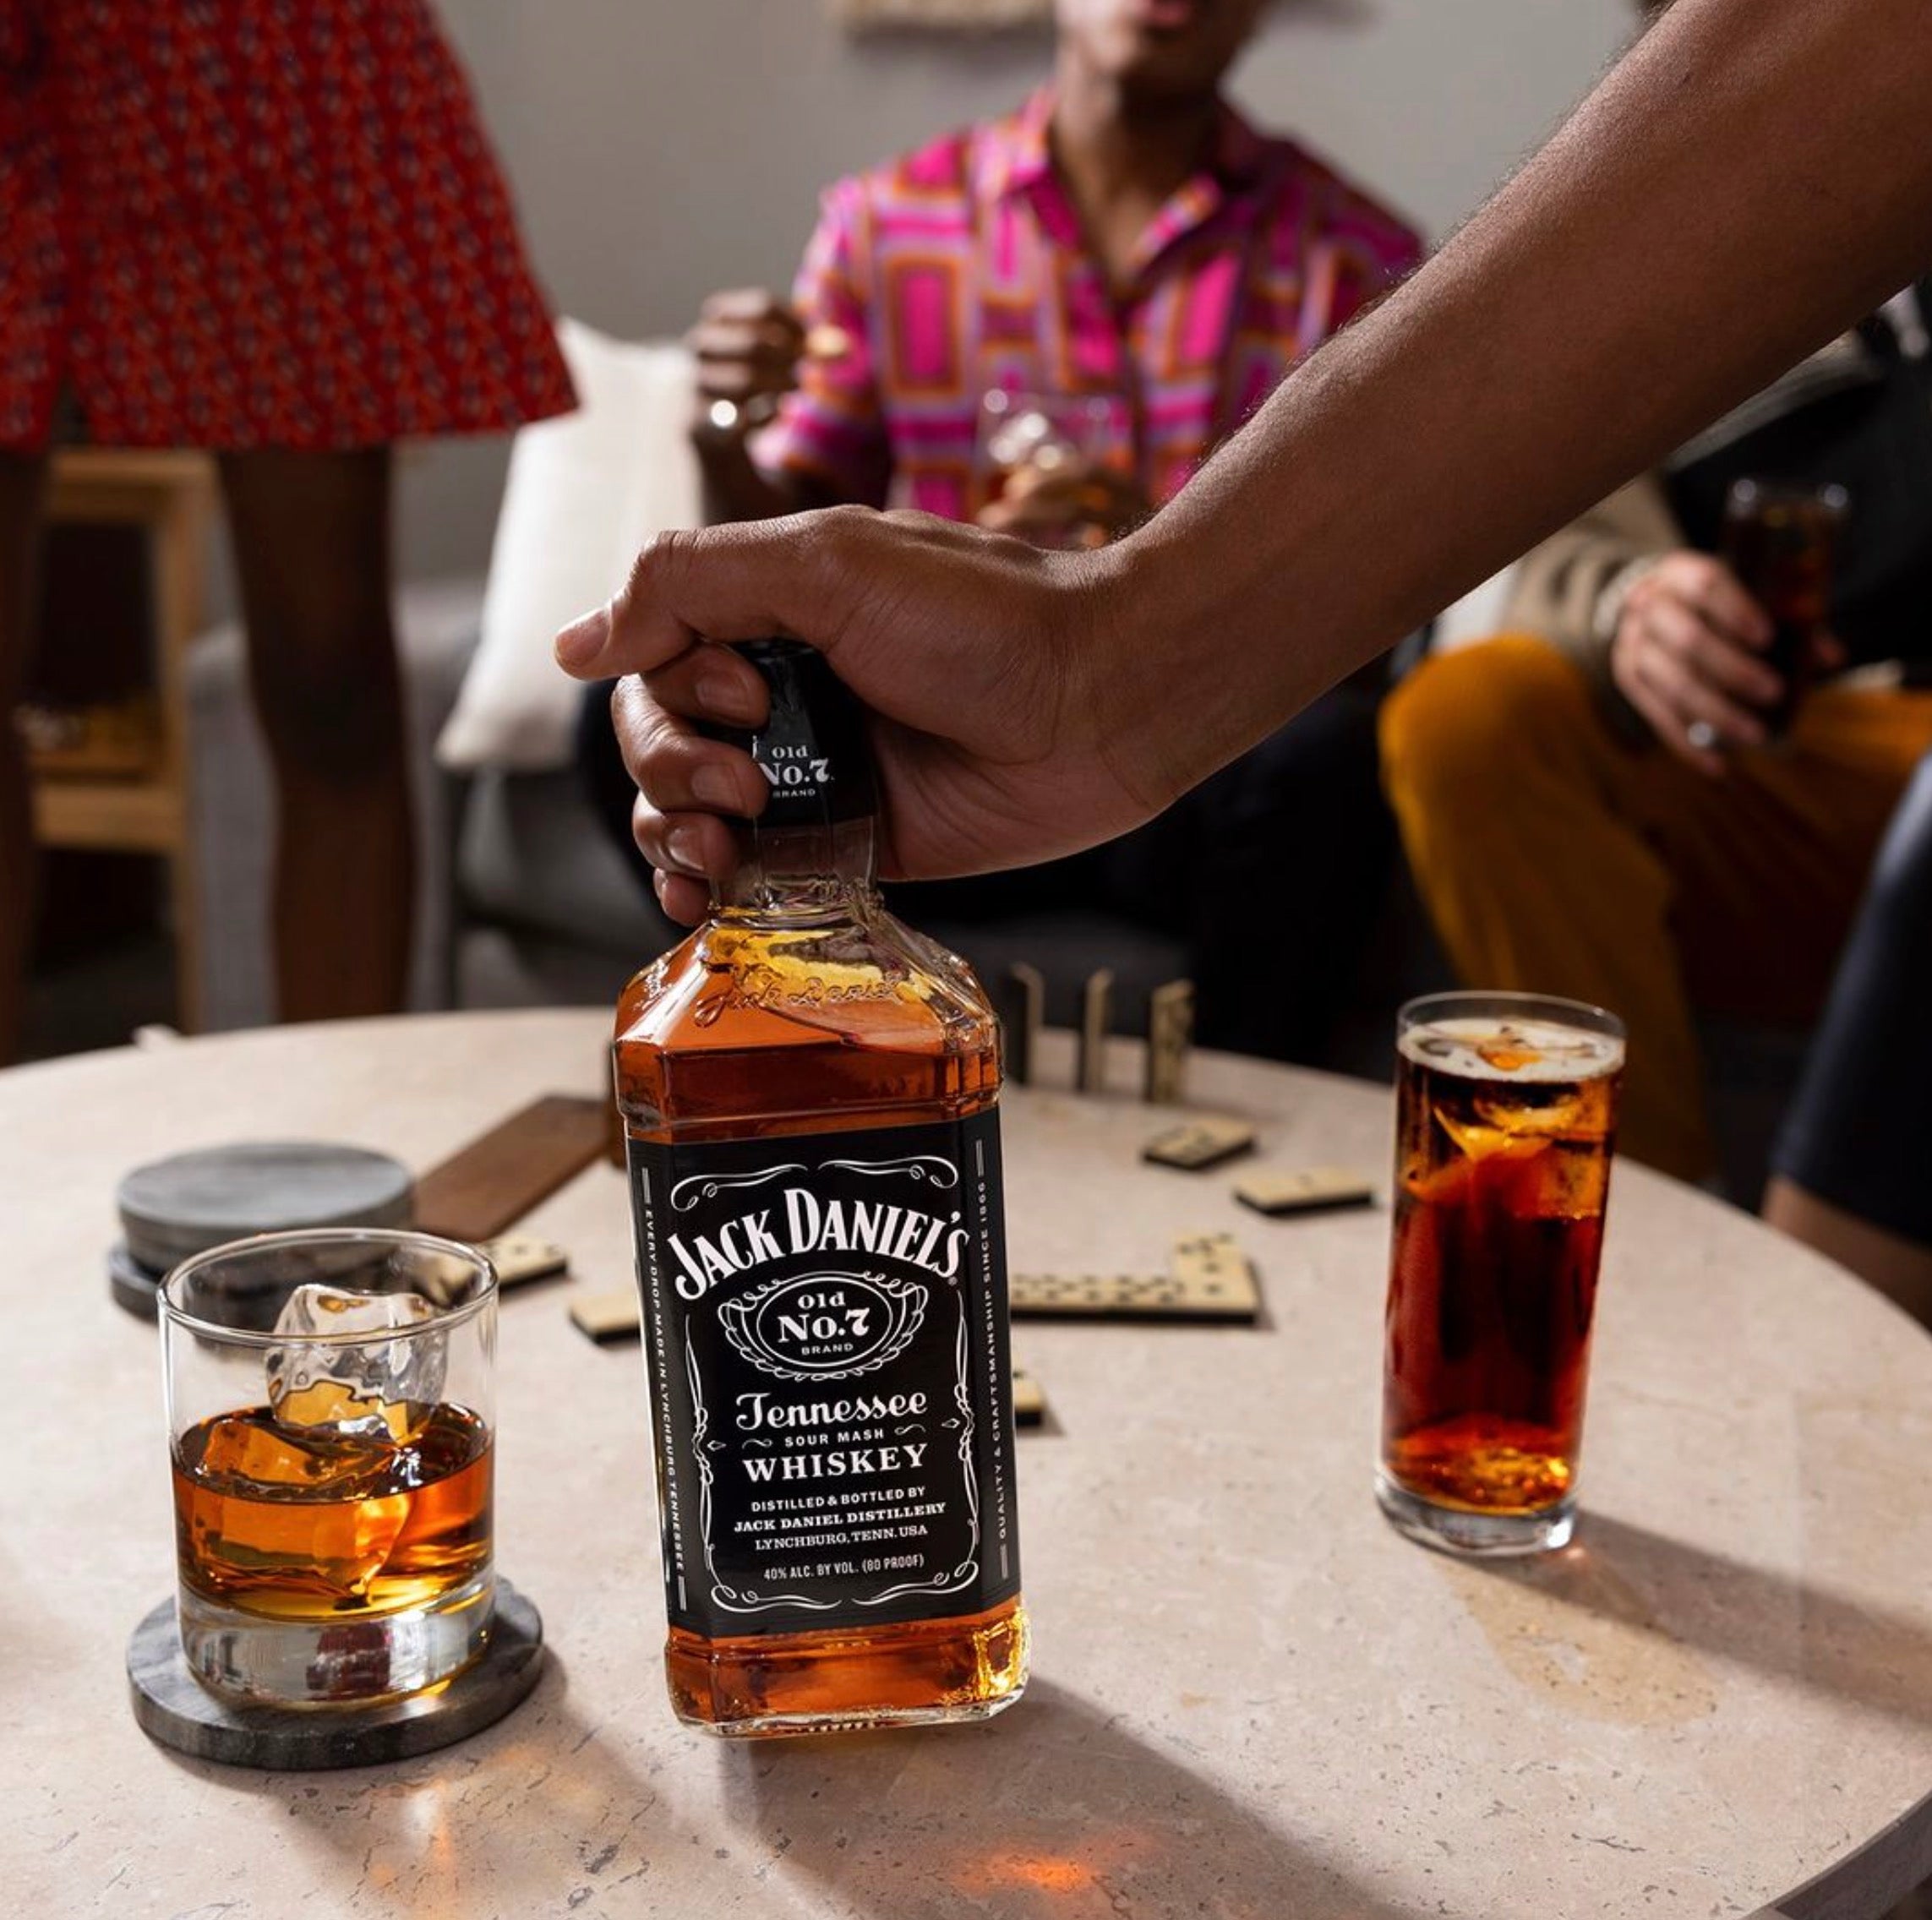 Jack Daniel's Tennessee Whiskey, jack daniel 